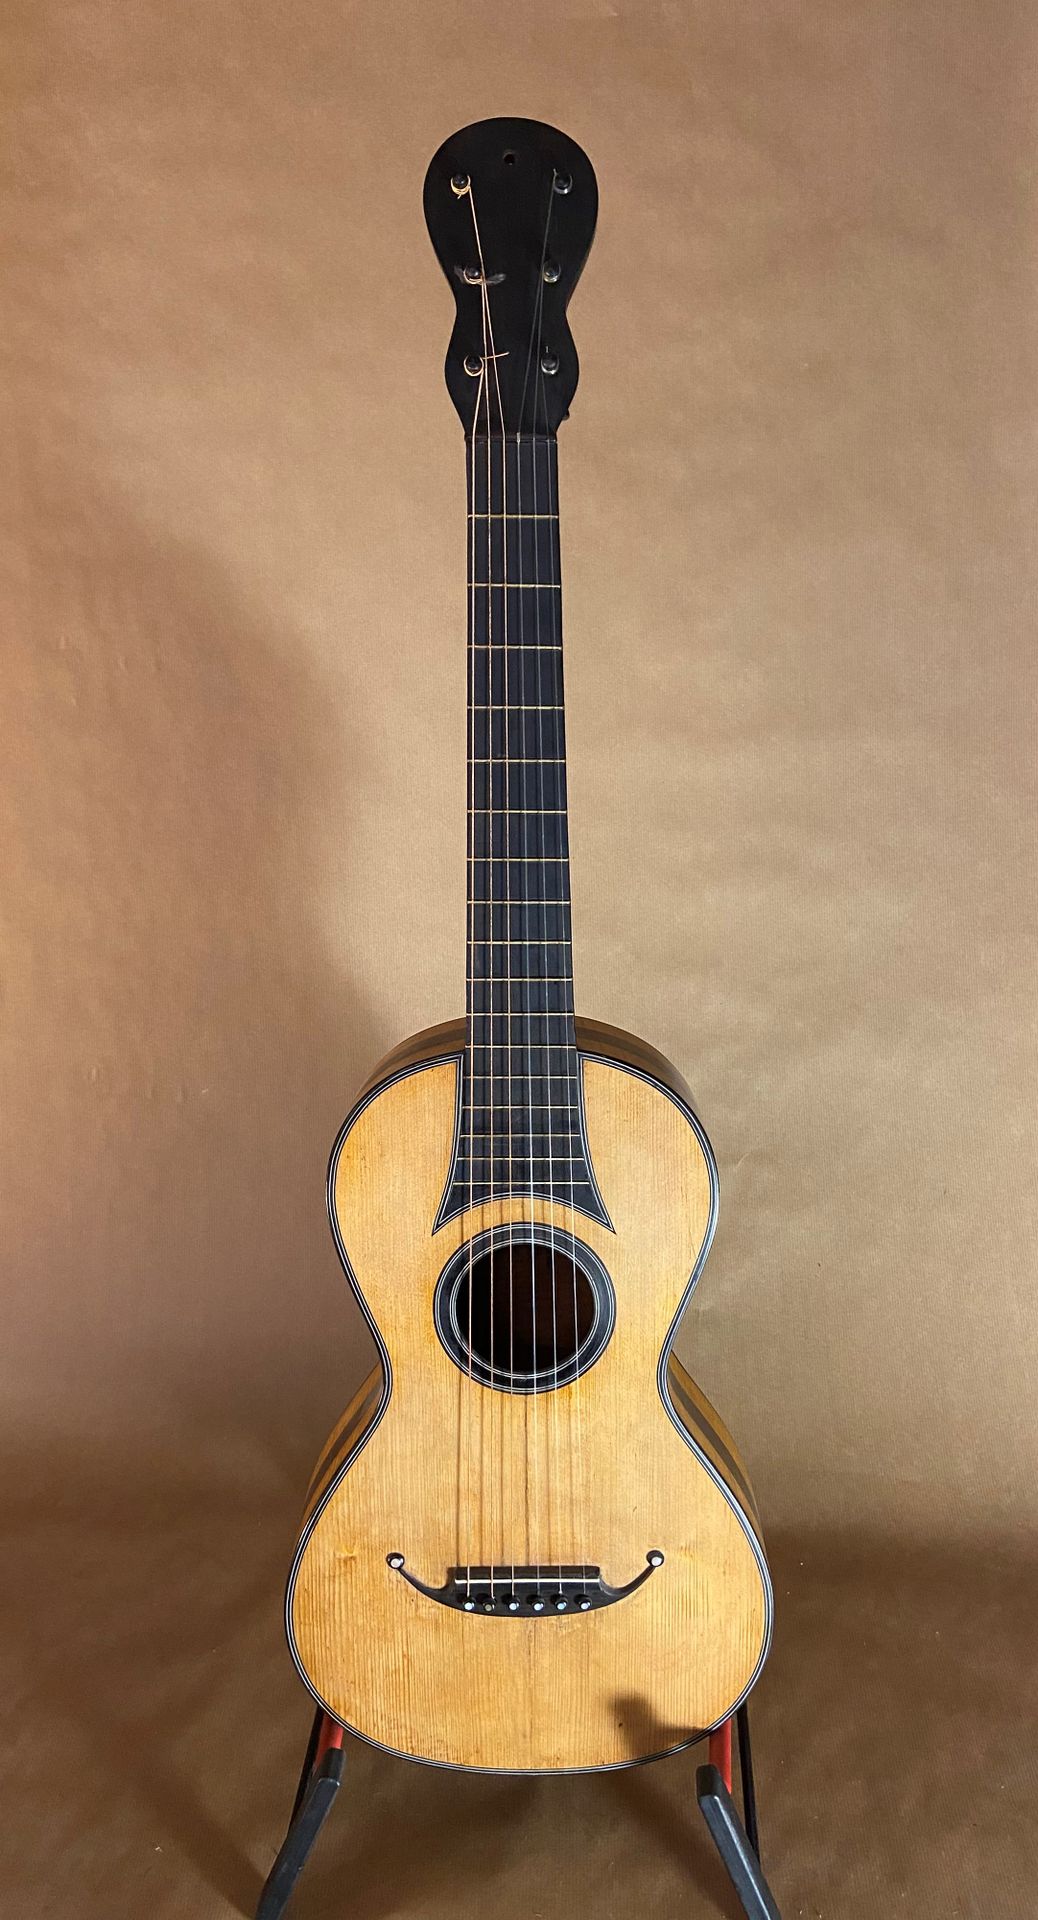 Null 巴黎PETITJEAN l AINE的浪漫主义吉他，背面有铁印

弦长632毫米，螺母间距45毫米

杉木面板。背板和侧板为枫木材质，涂有带状物的Tr&hellip;